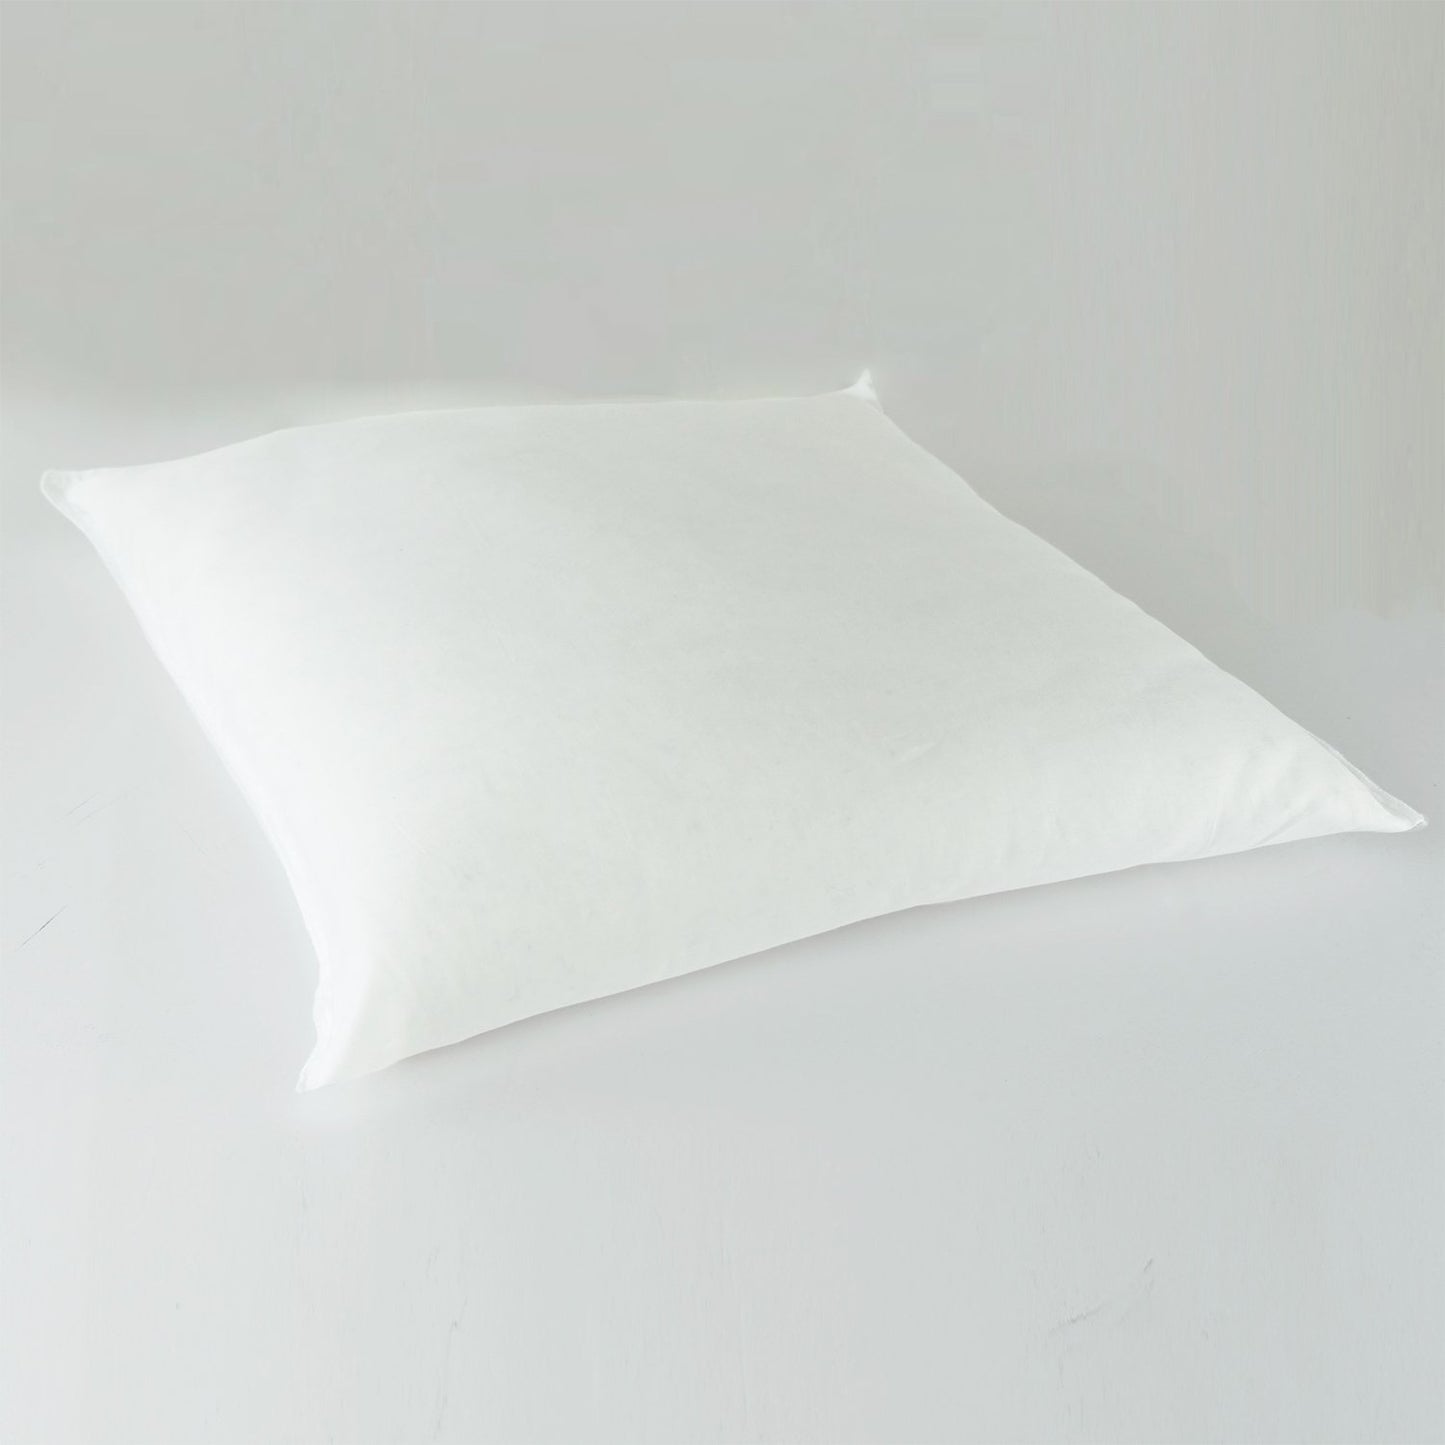 Ya Gasuri Light Blue Zabuton Floor Pillow_Pillows & Shams_Zabuton Floor Pillows_100% Cotton_Reversible